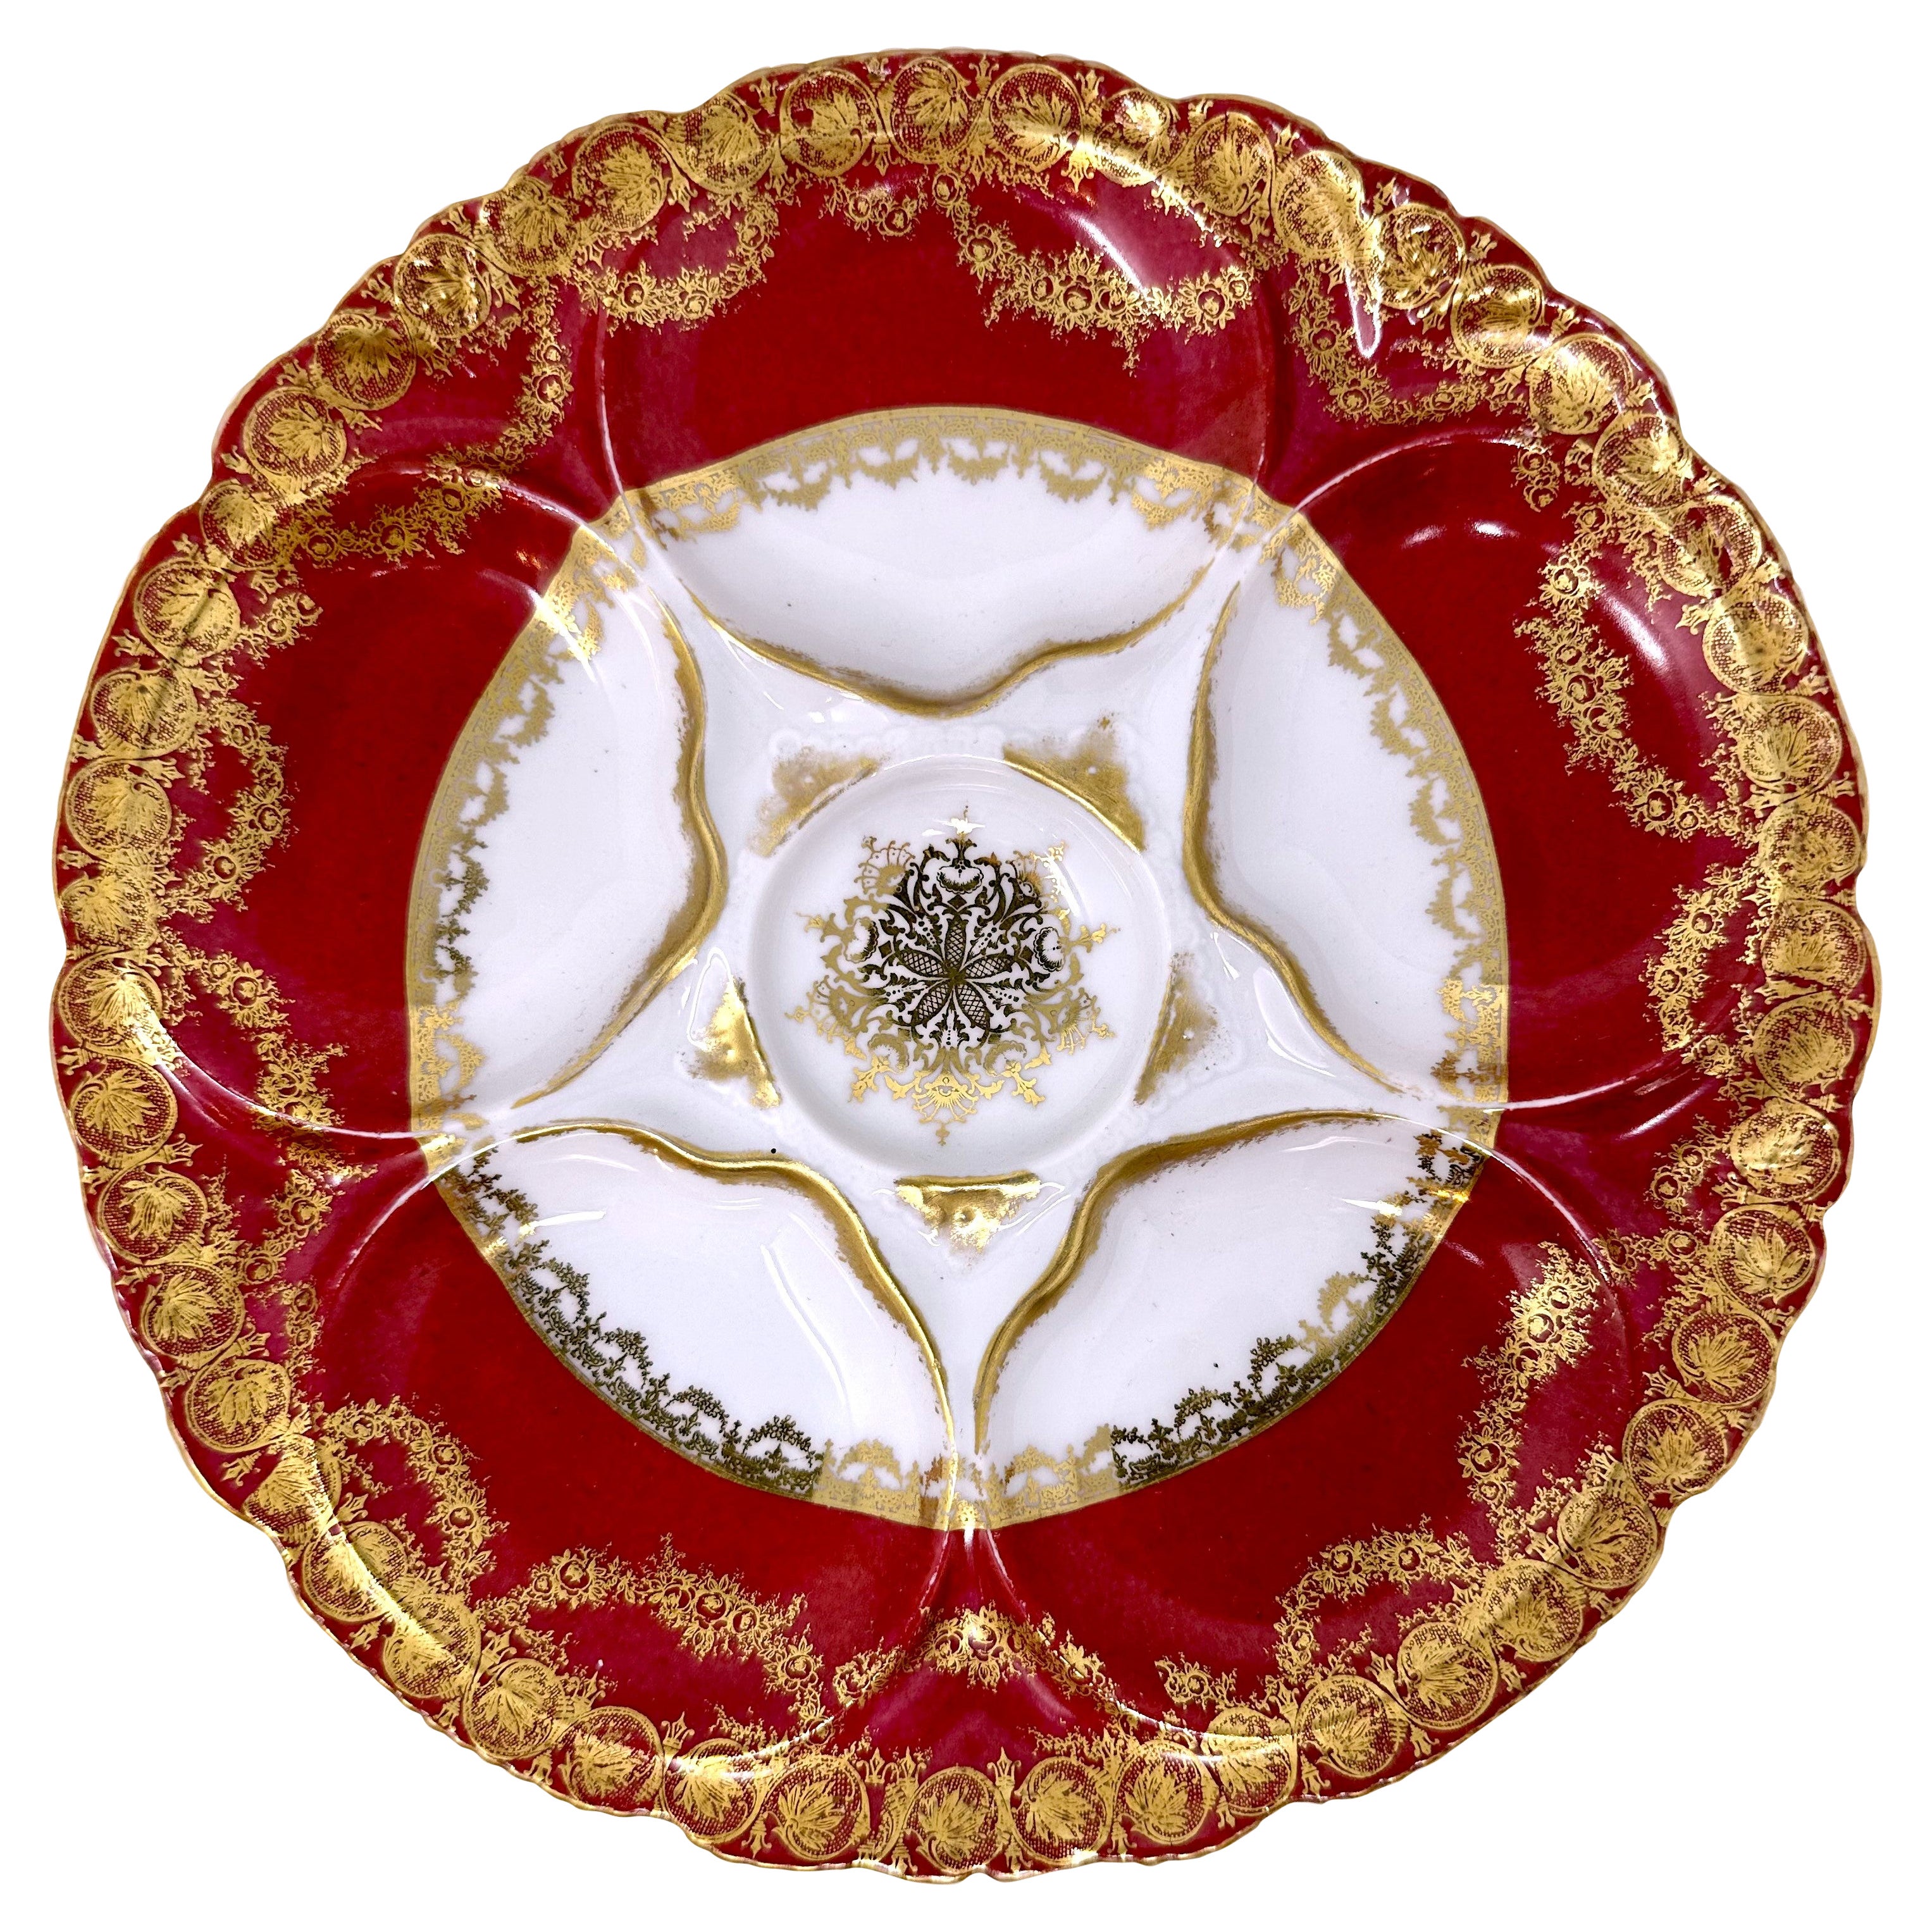 Antique French Haviland Limoges Red & Gold  Porcelain Oyster Plate, Circa 1900.